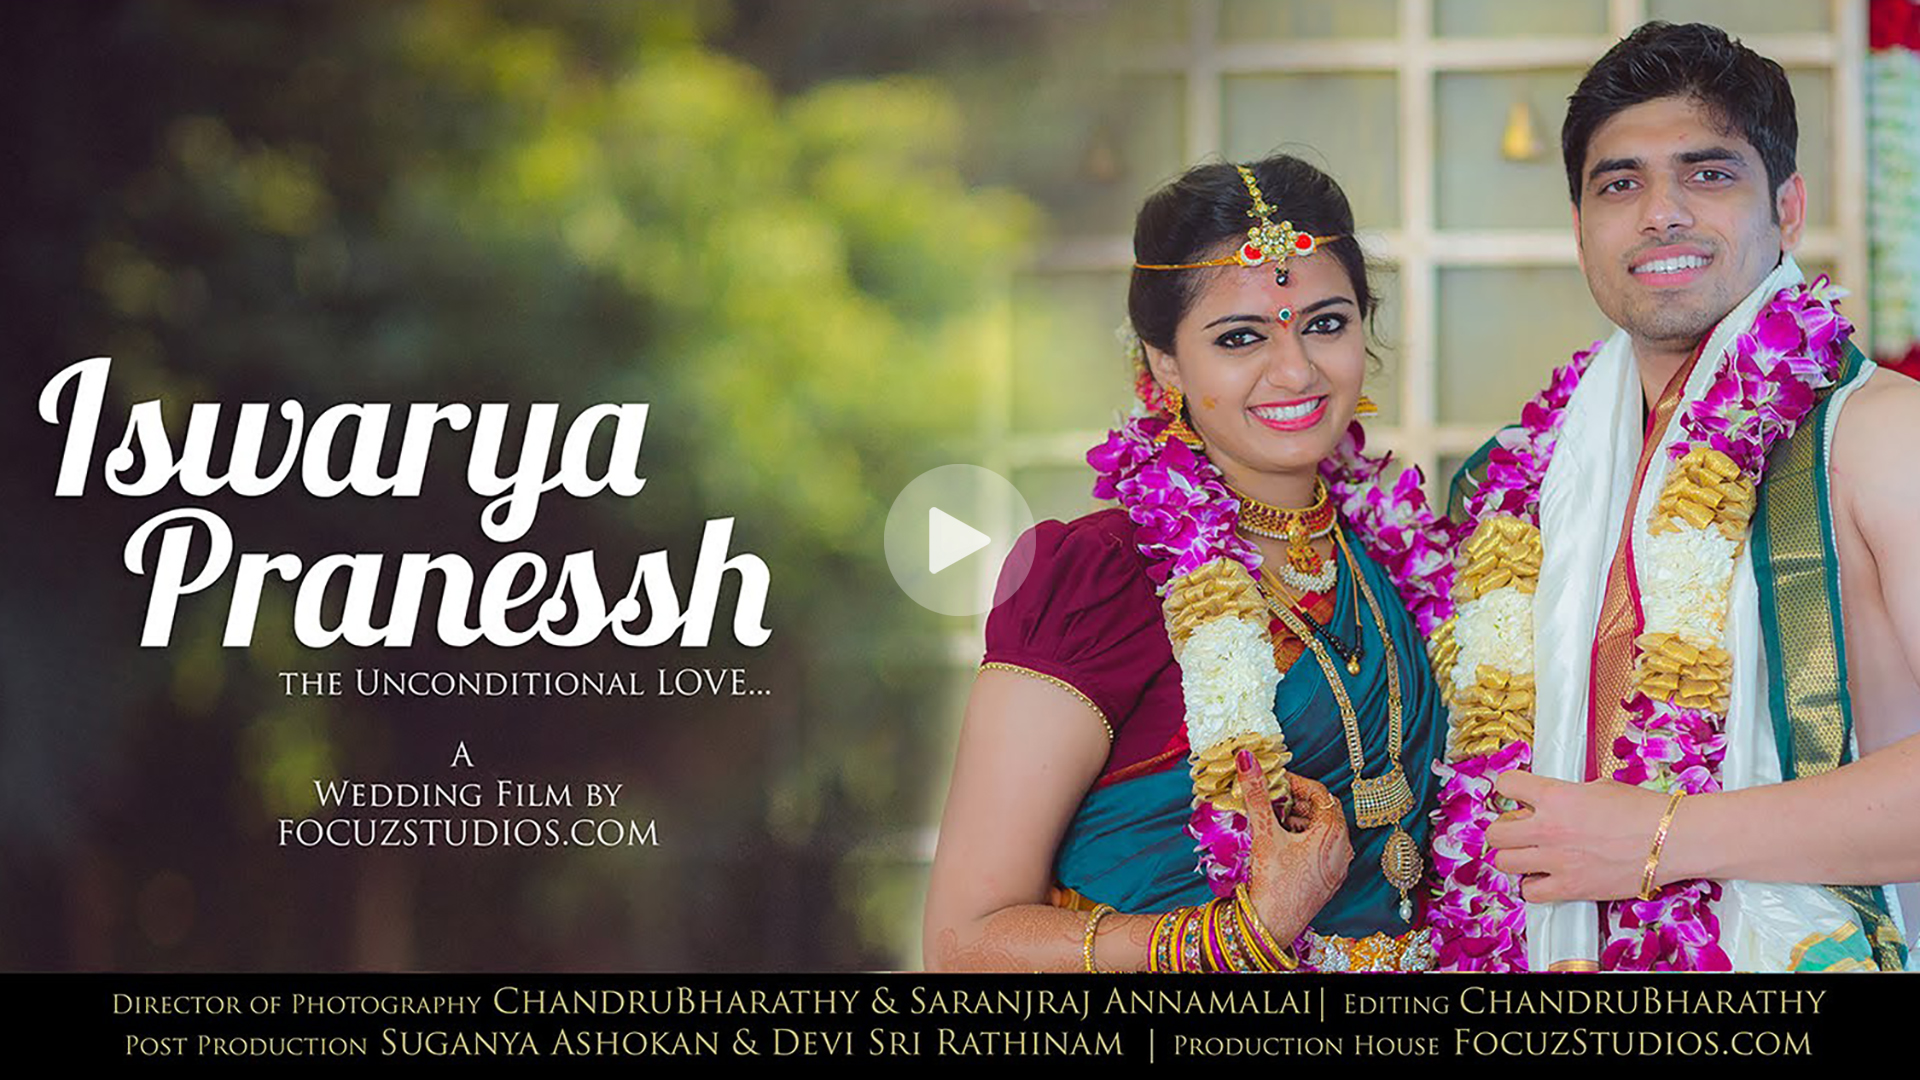 Wedding Film of Sun TV Iswarya with Pranessh